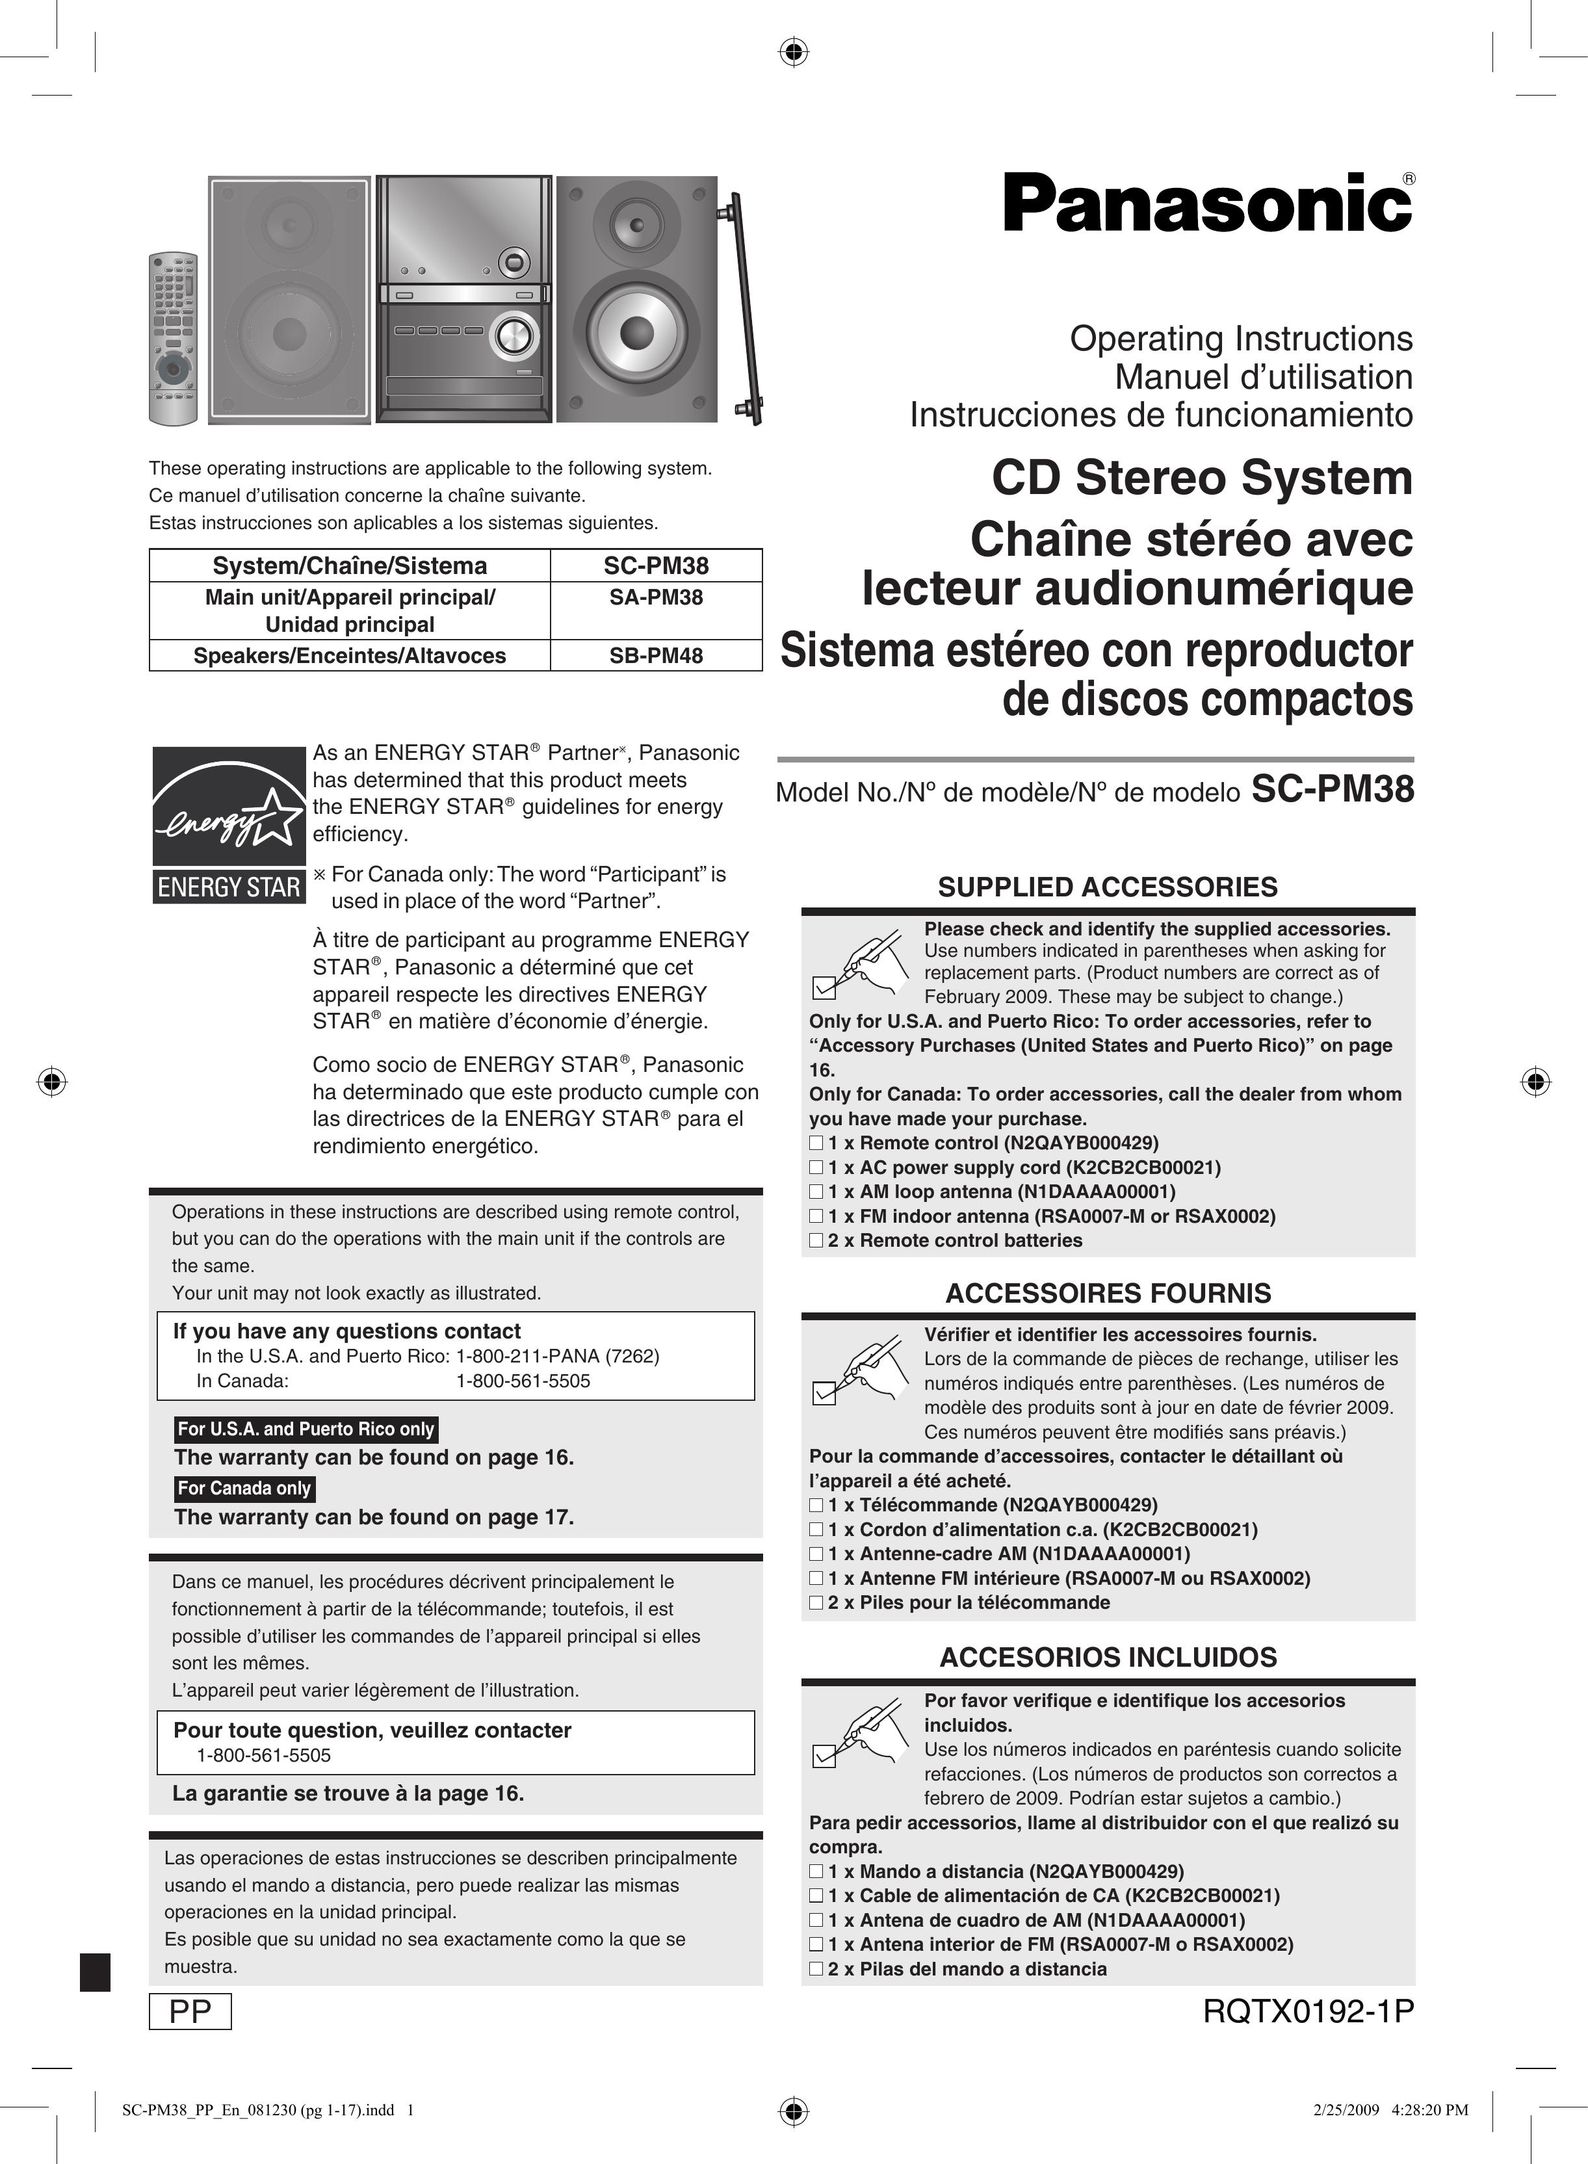 Panasonic SA-PM38 Stereo System User Manual